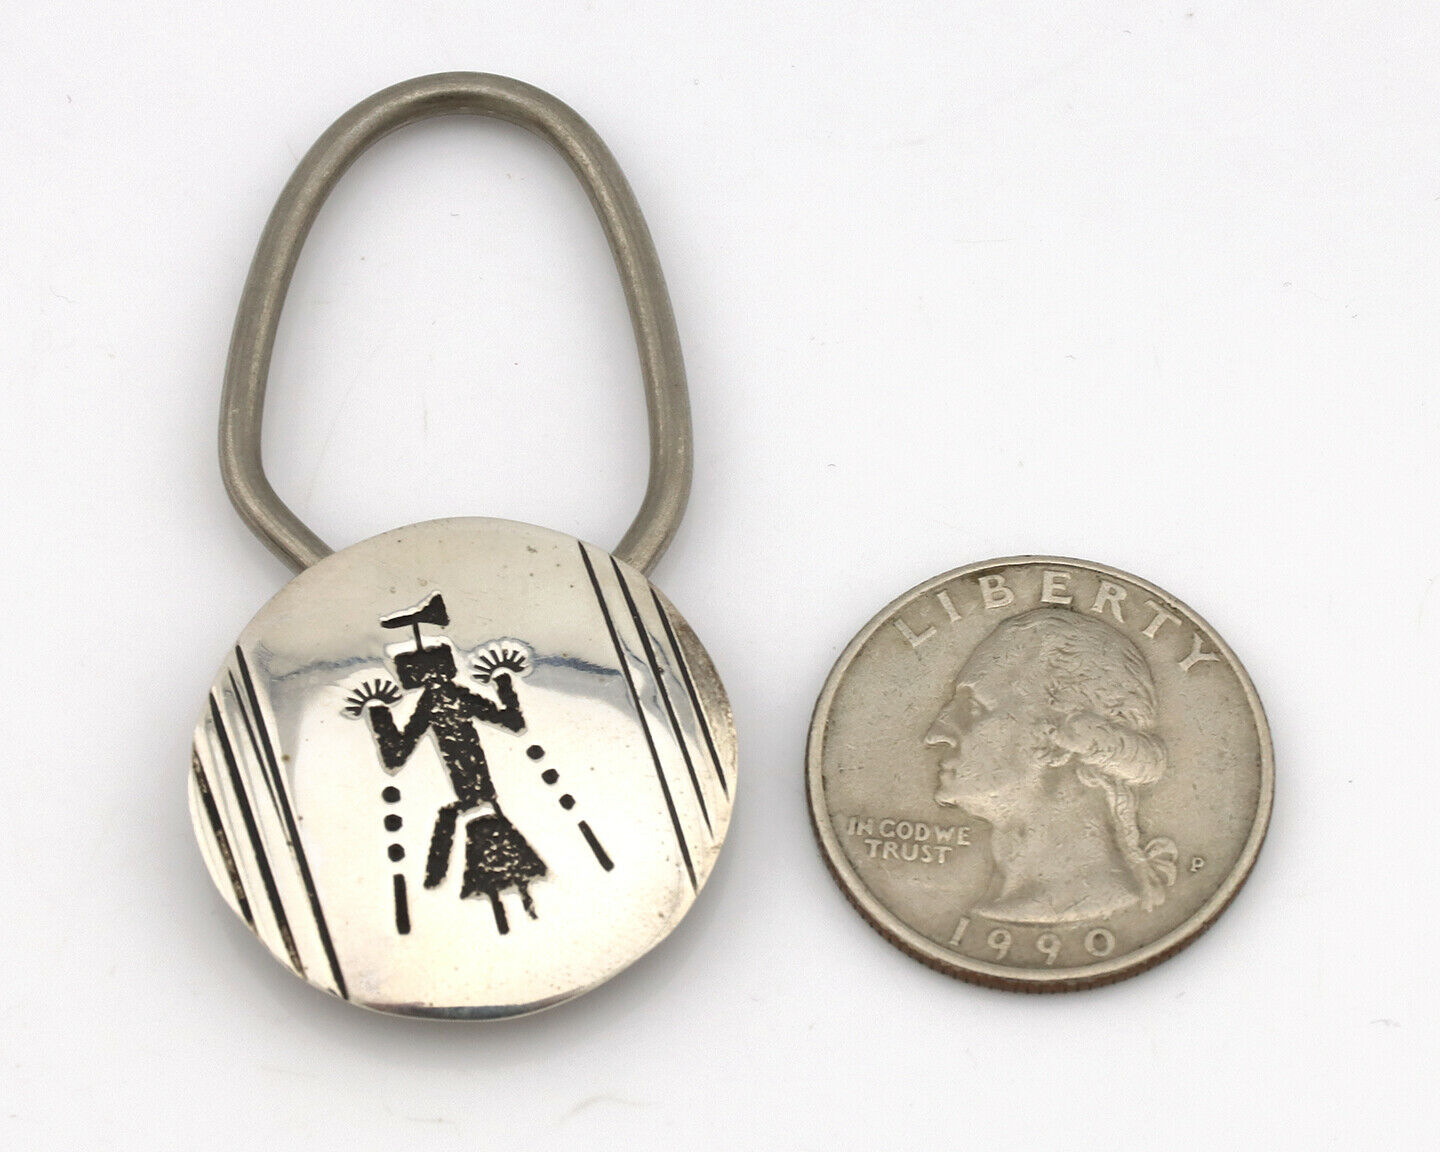 Navajo Kokopelli Key Chain .925 Silver Handmade Overlay Signed Thomas Singer C80